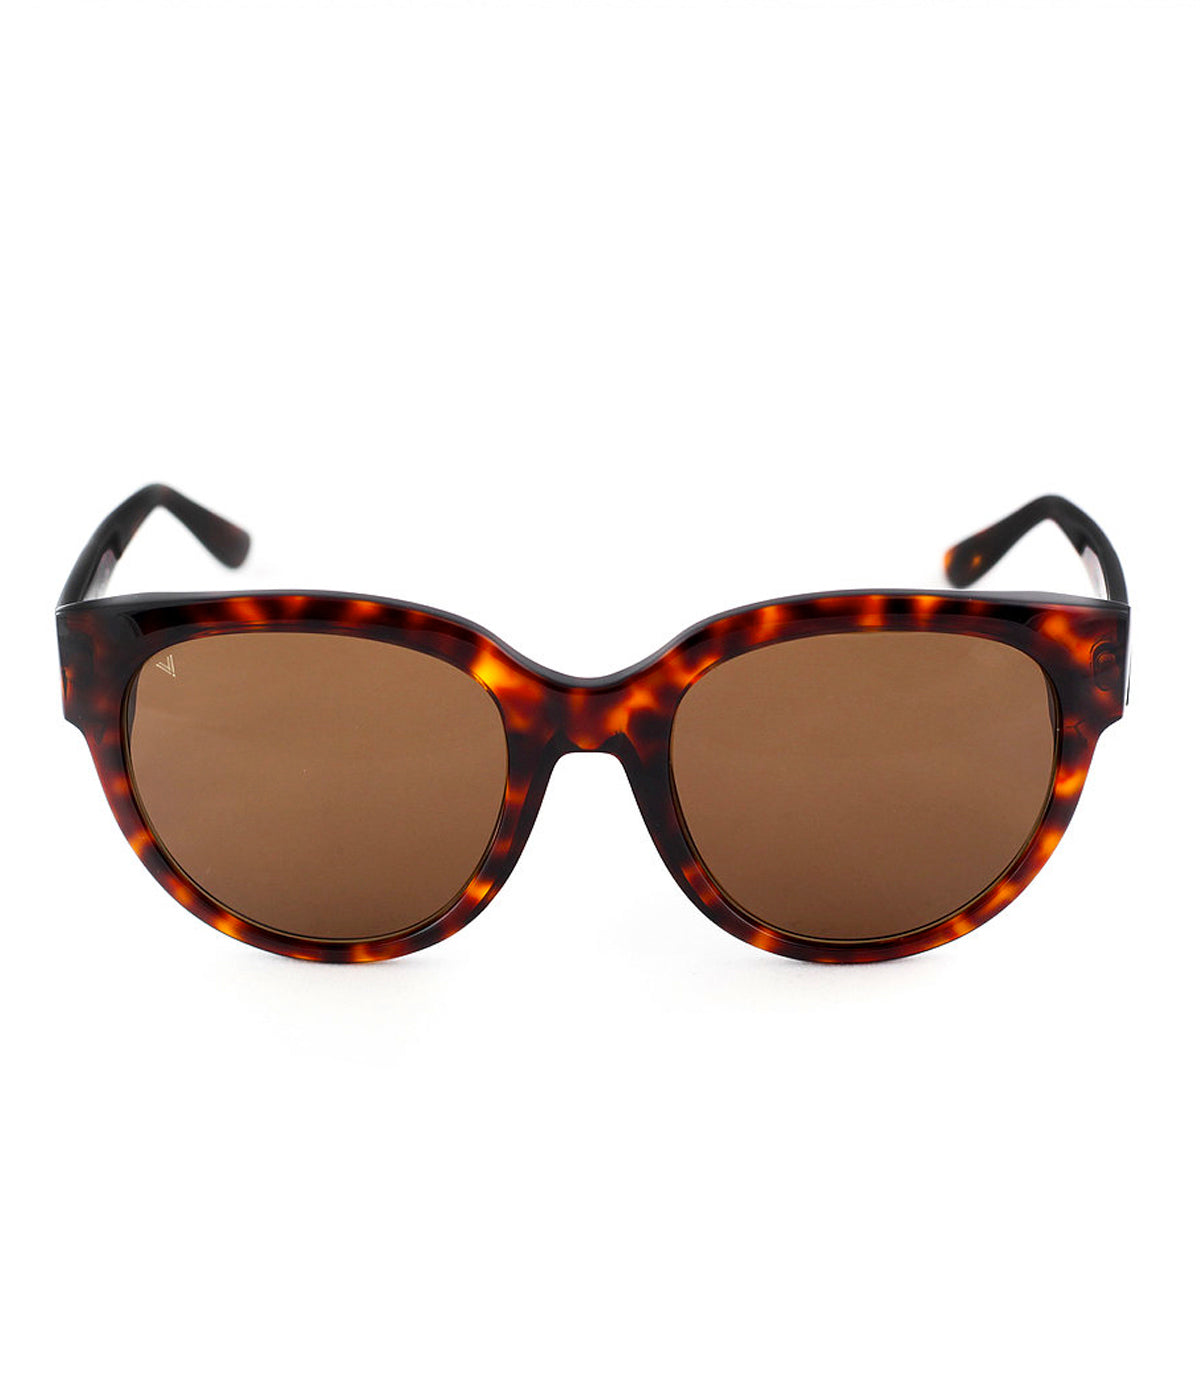 Vittoria Sunglasses in Dark Avana & Brown